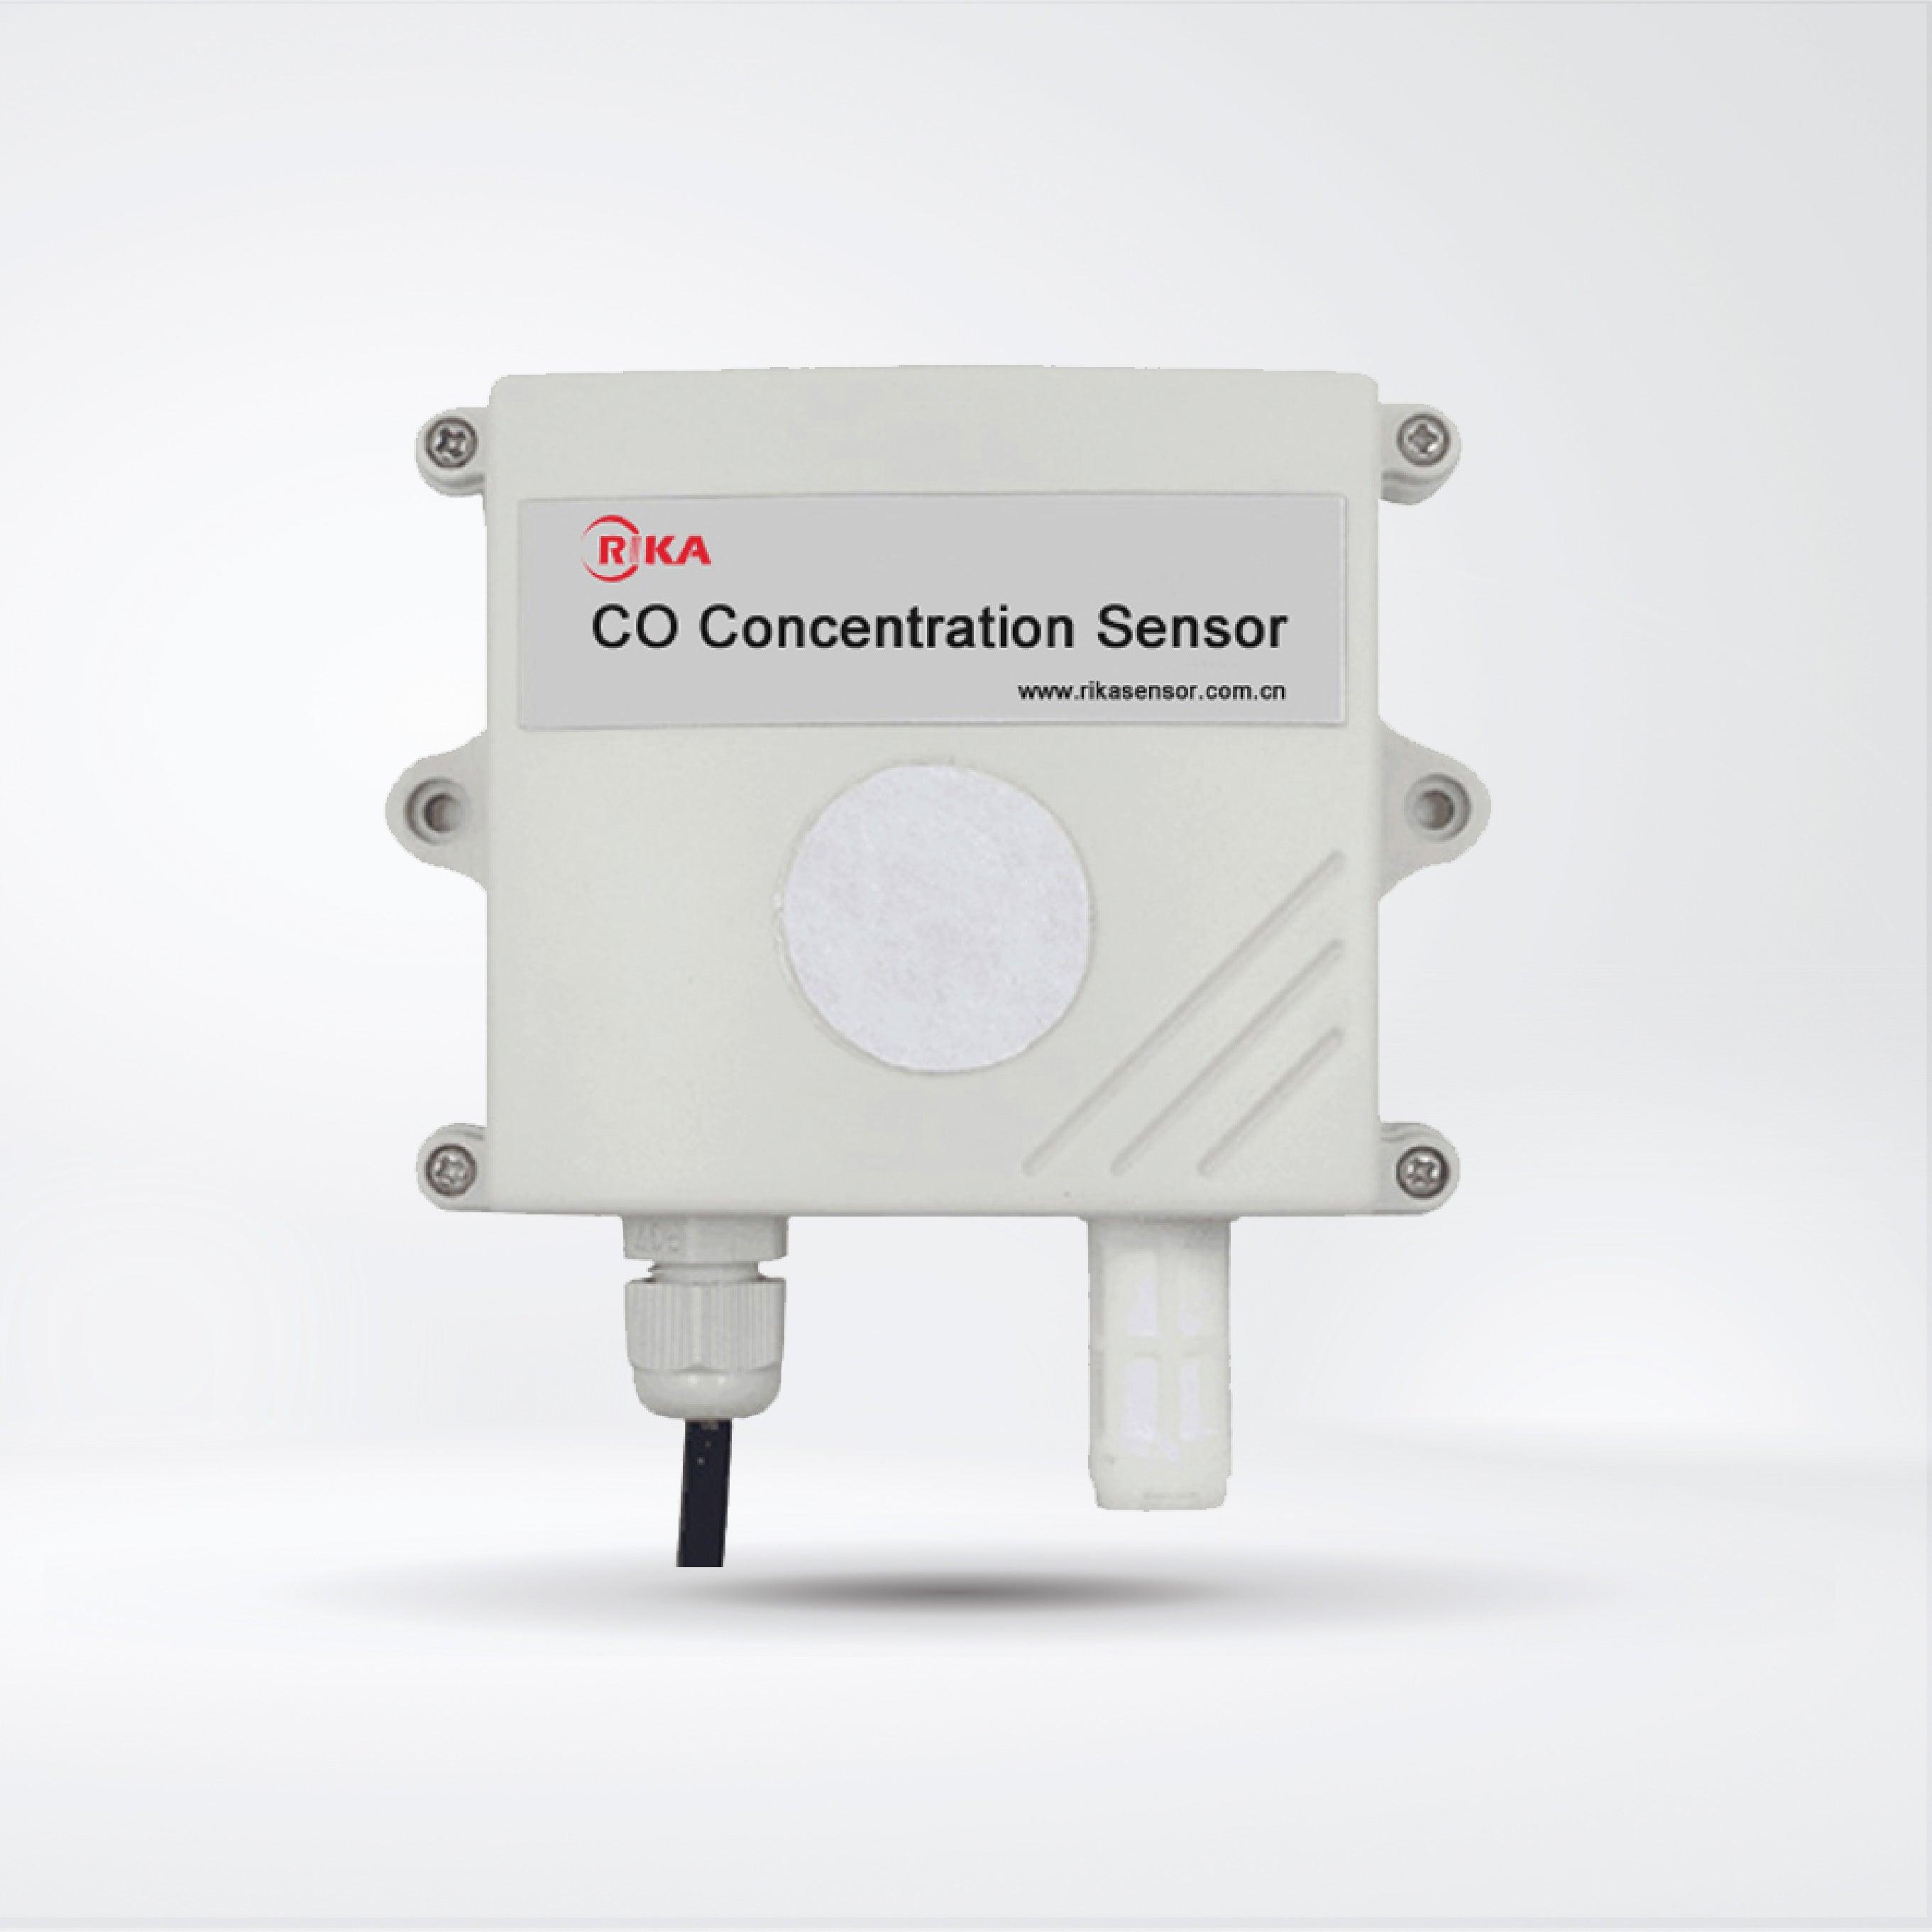 RK300-11 CO Concentration Sensor - Riverplus